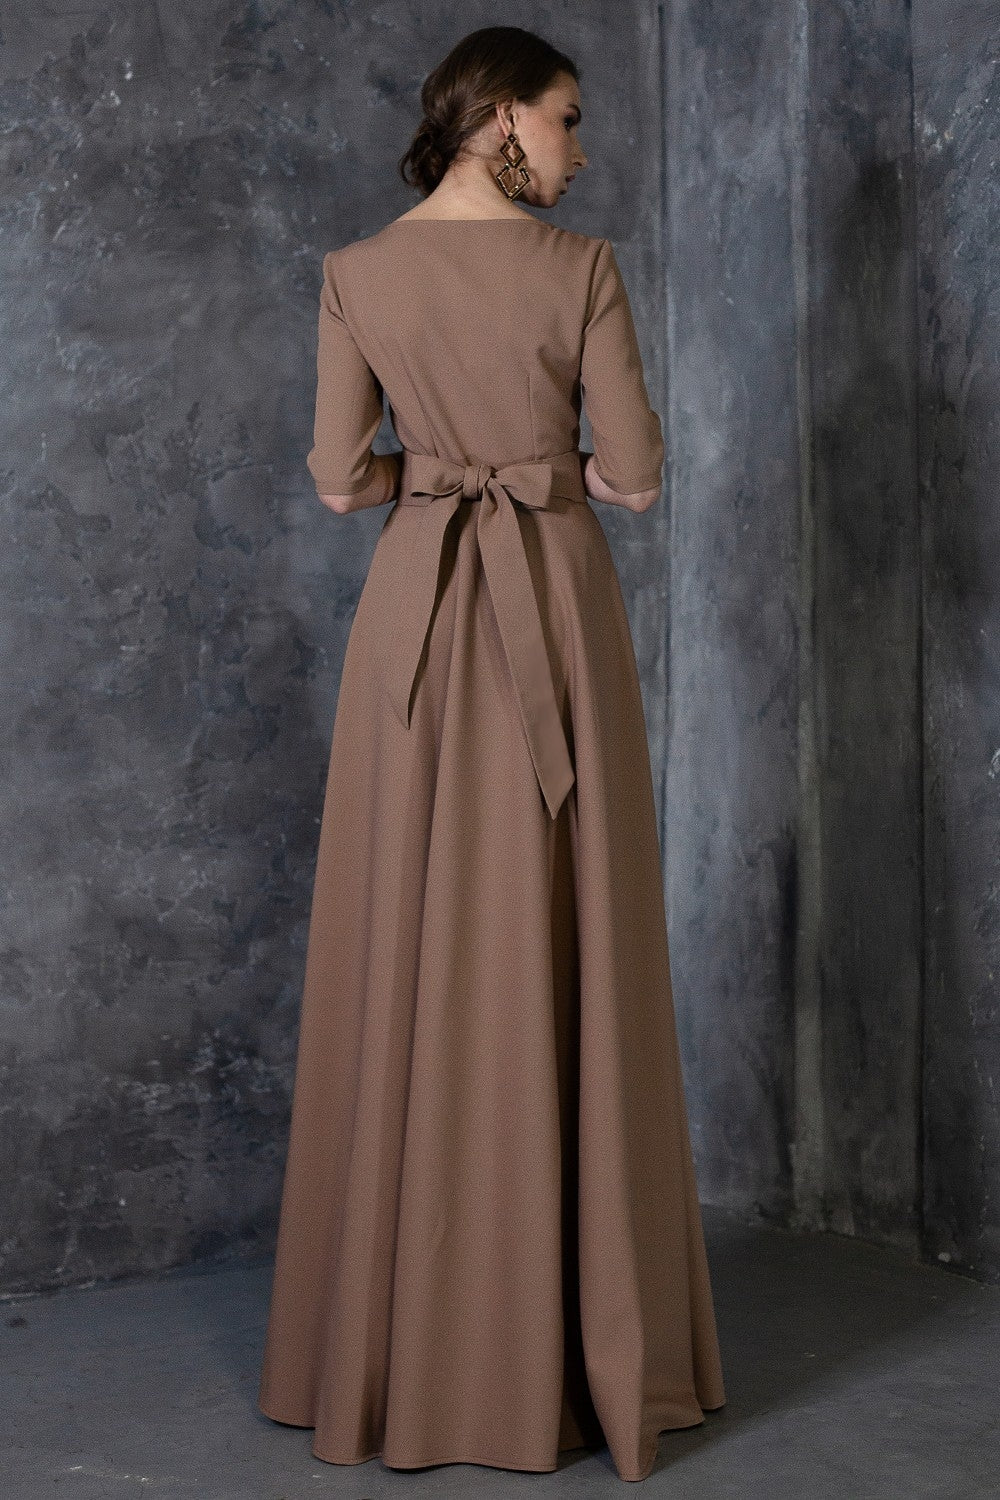 Brown maxi dress with circle skirts